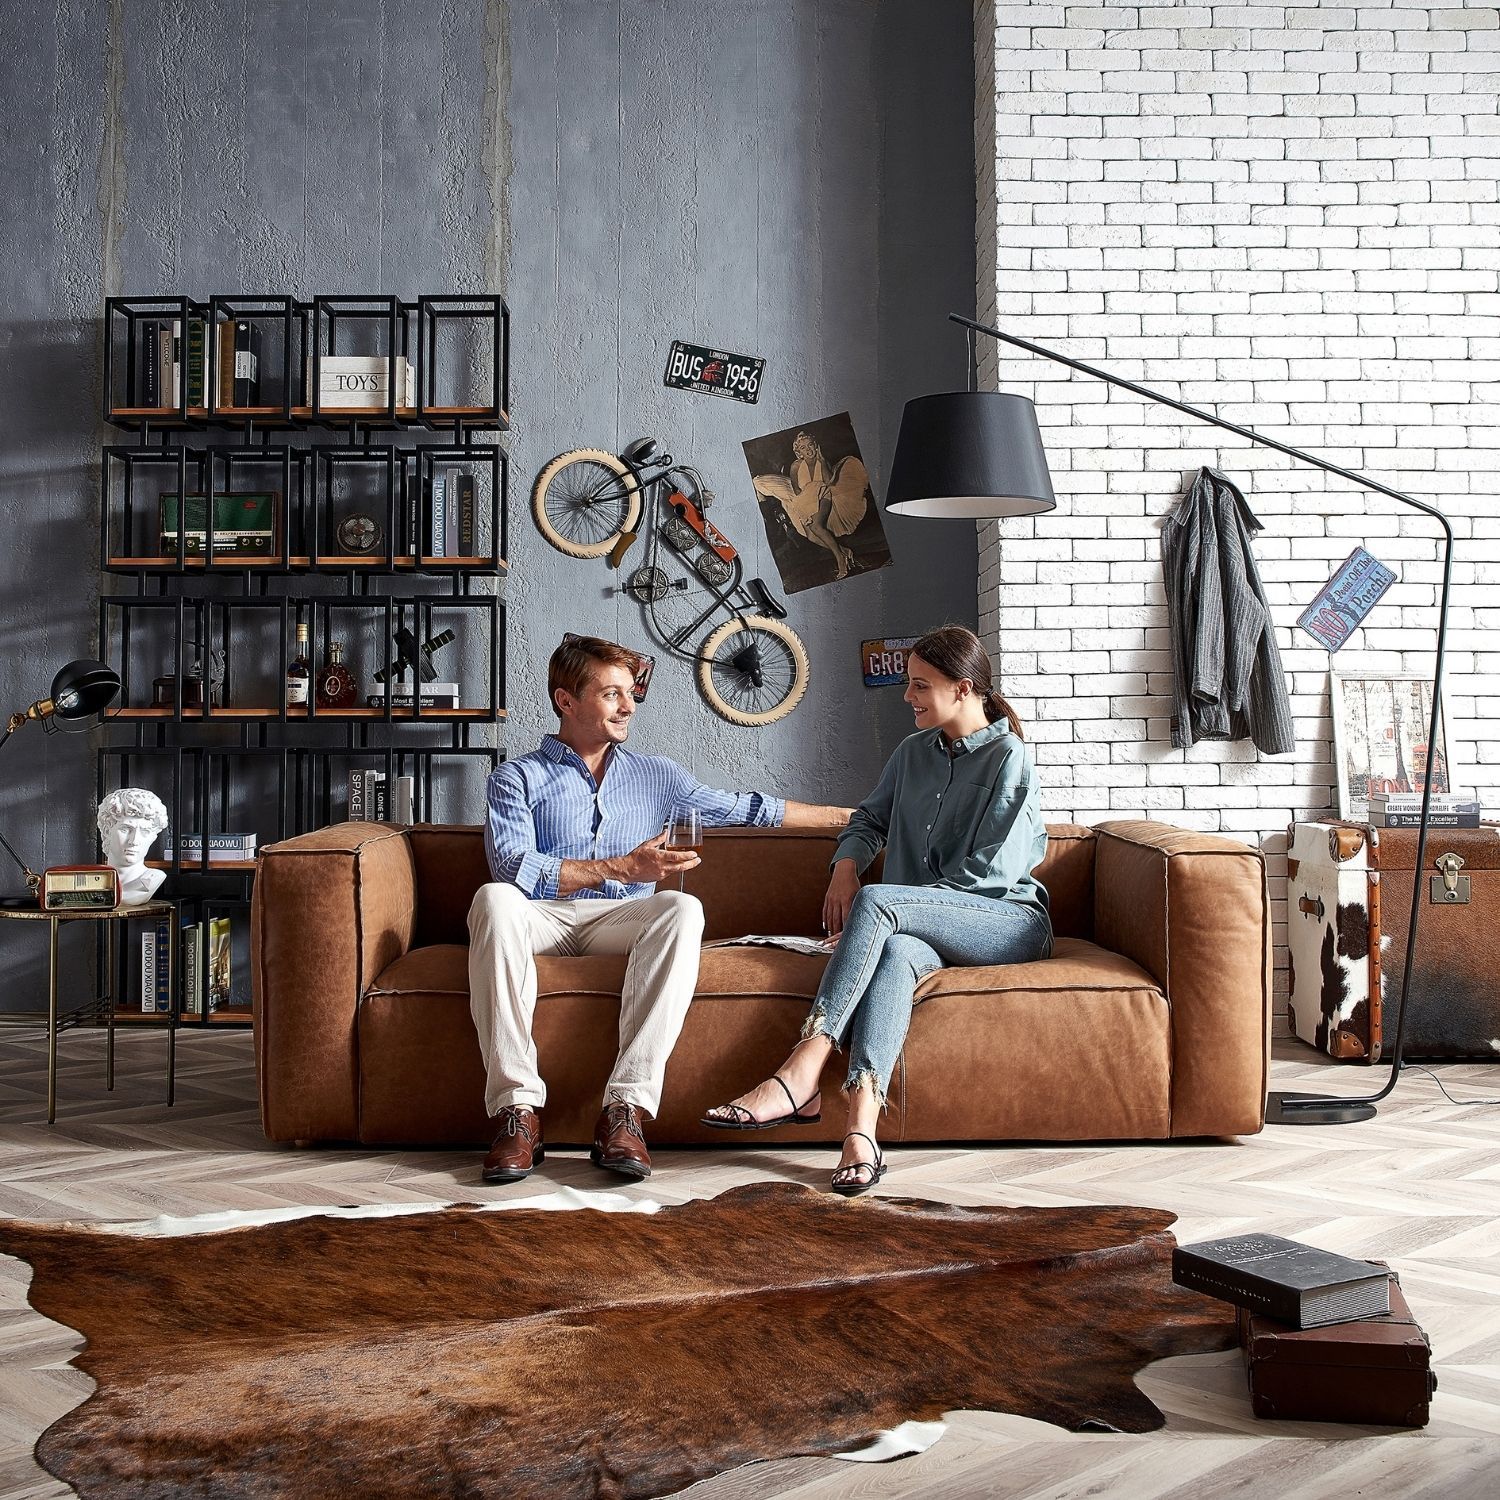 Lohrmann Sofa | Valyou Furniture